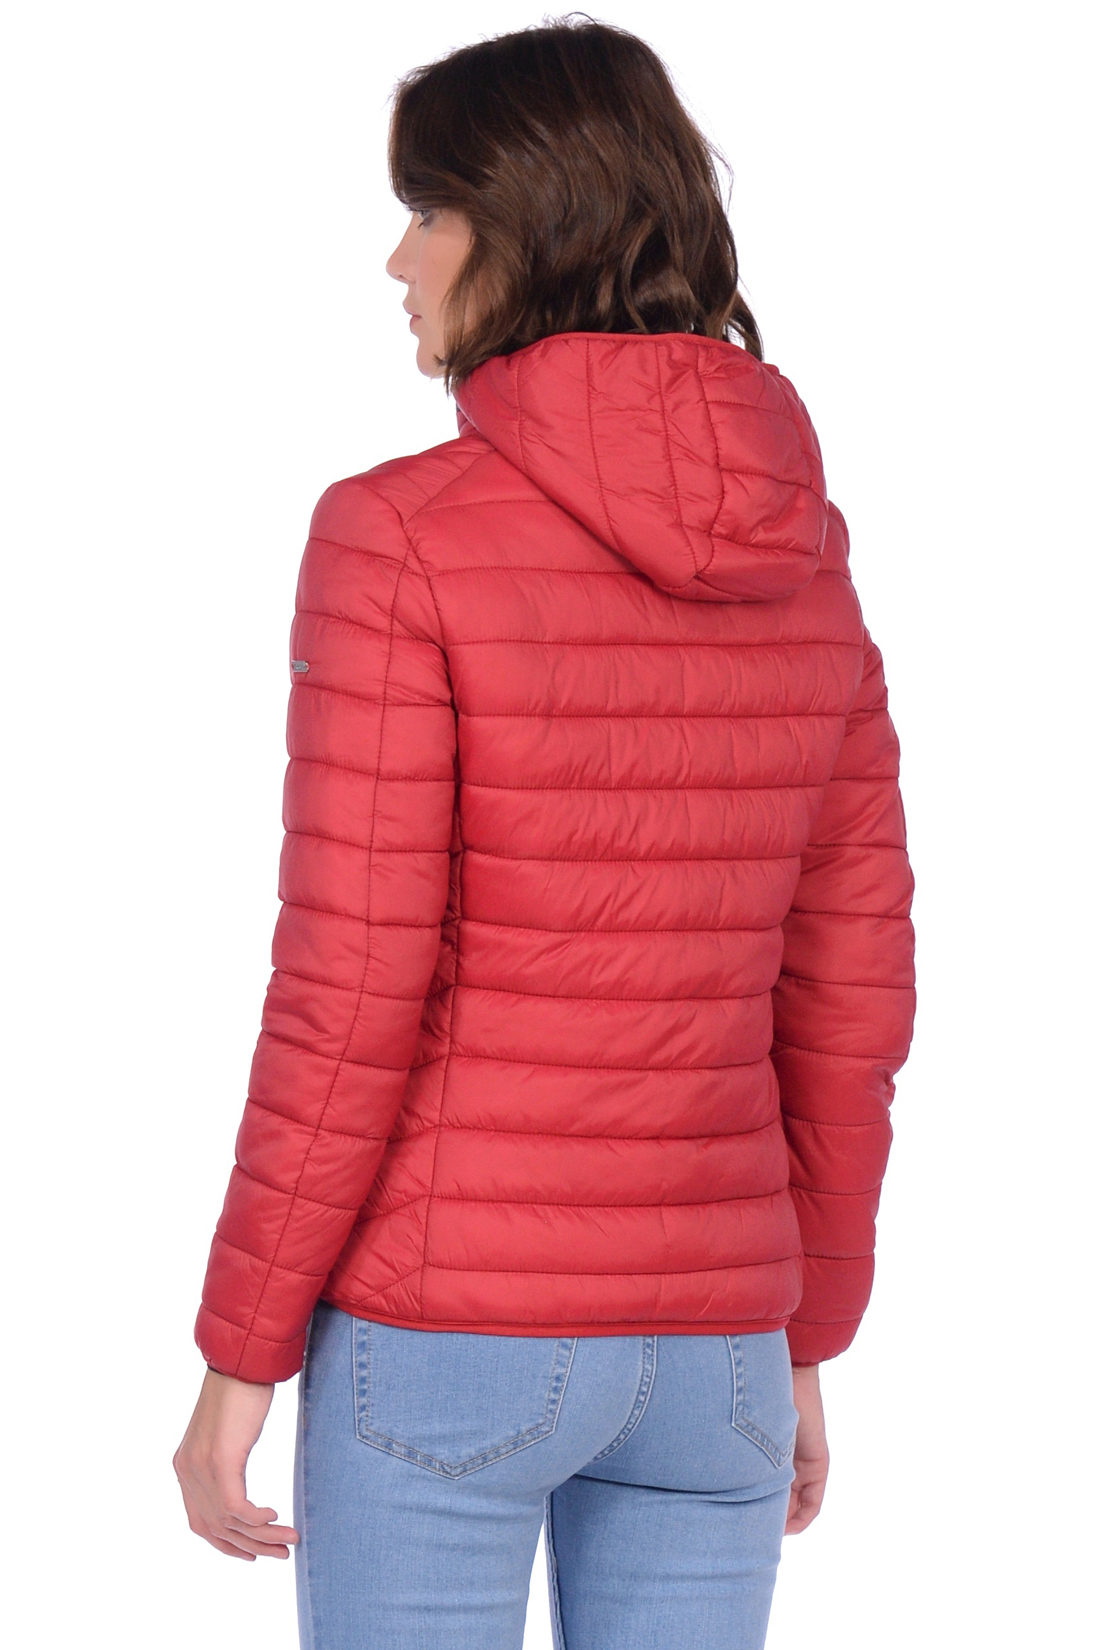 Двухстороняя куртка (арт. baon B039550), размер M, цвет красный Двухстороняя куртка (арт. baon B039550) - фото 2